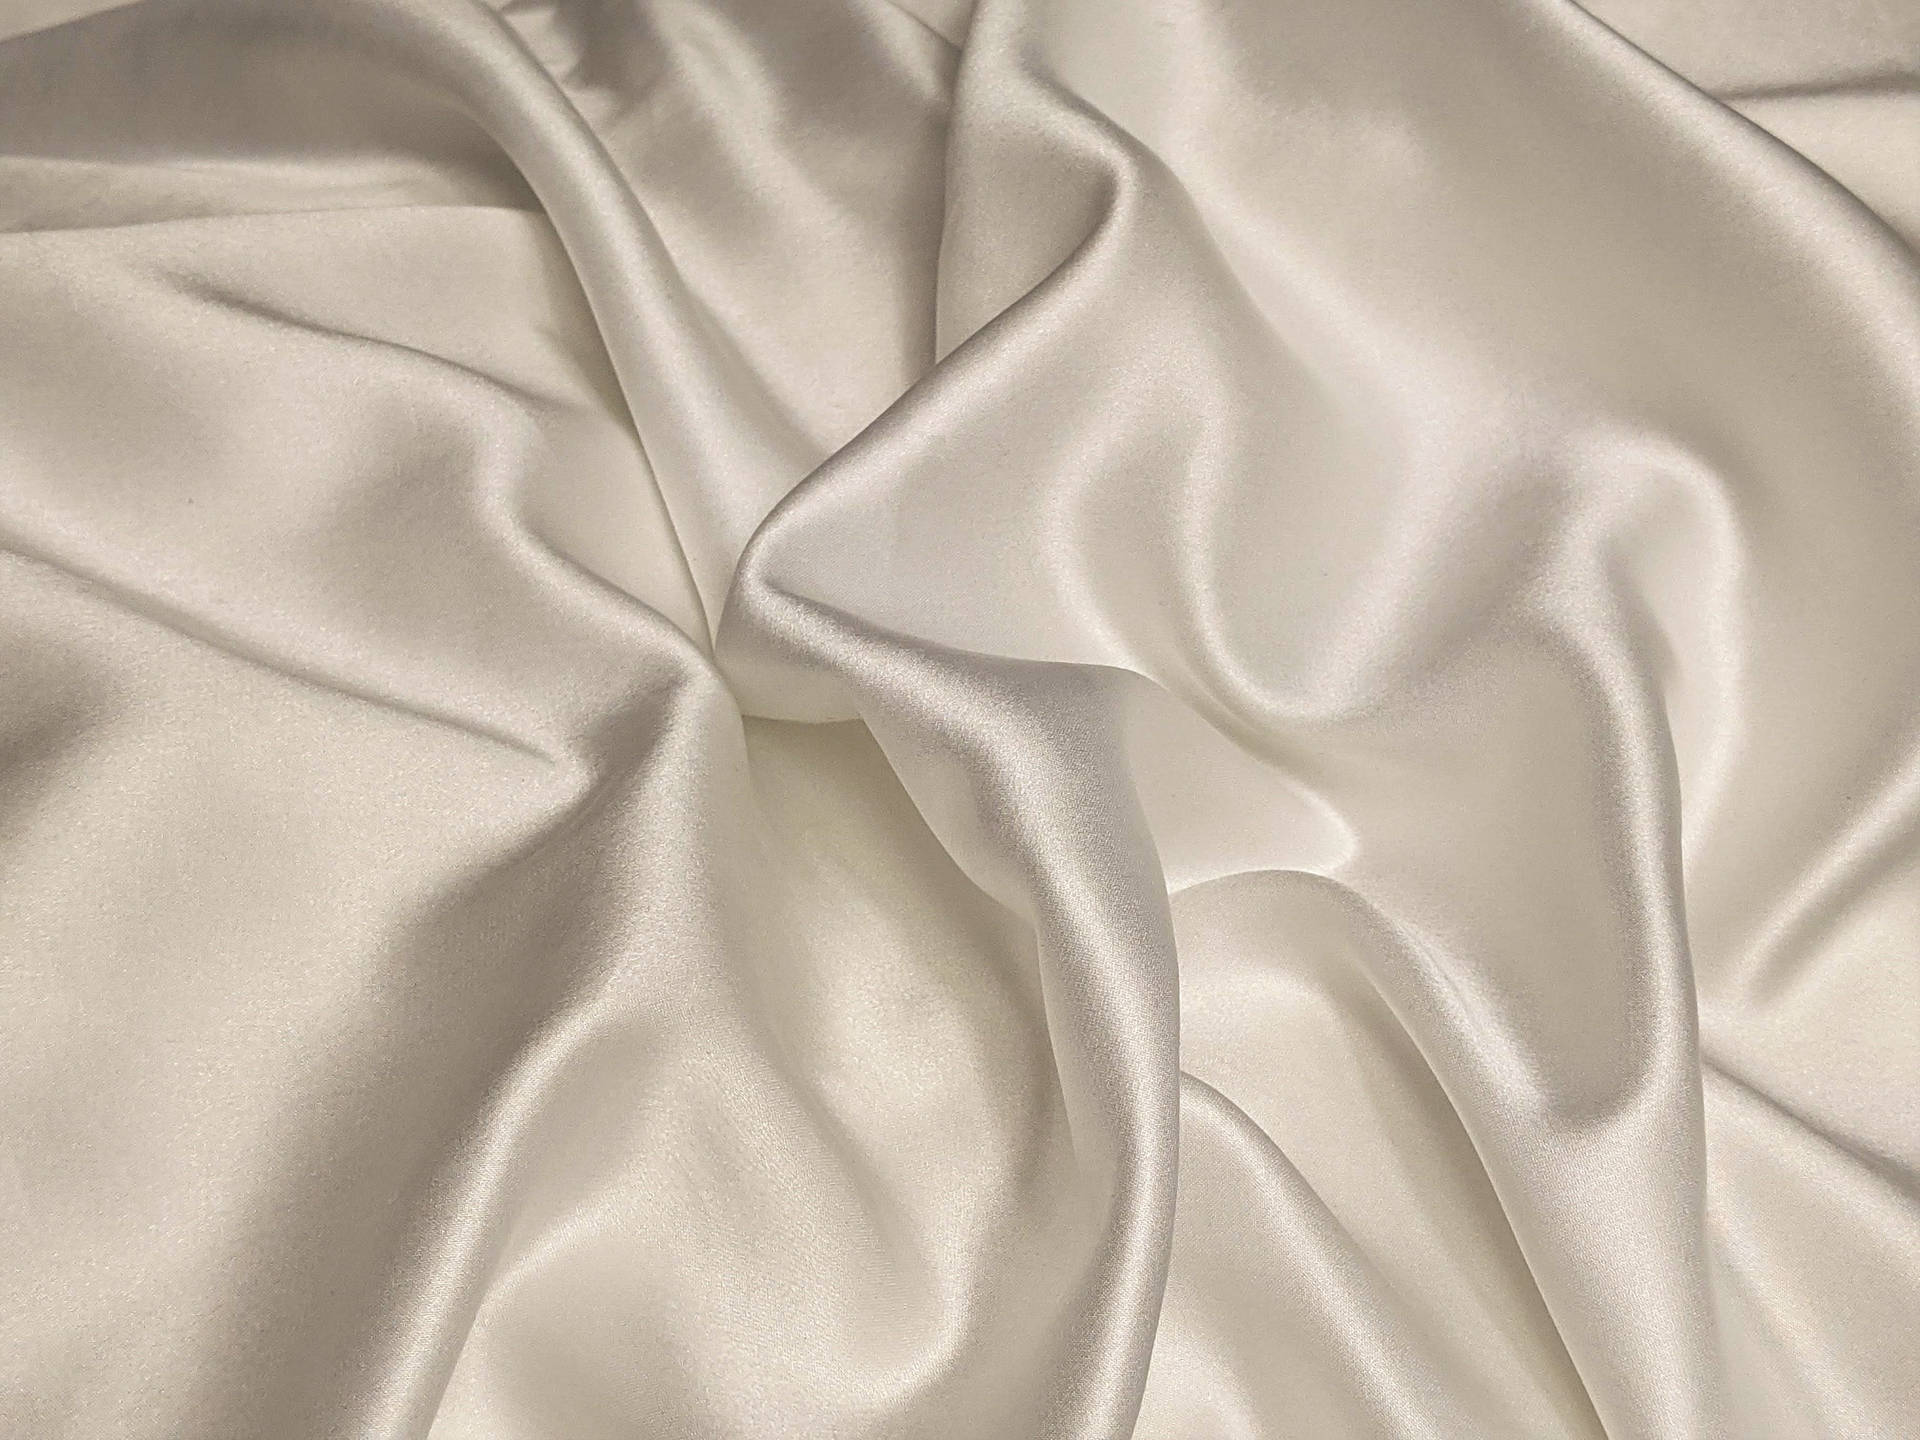 Rippled White Silk Fabric Background